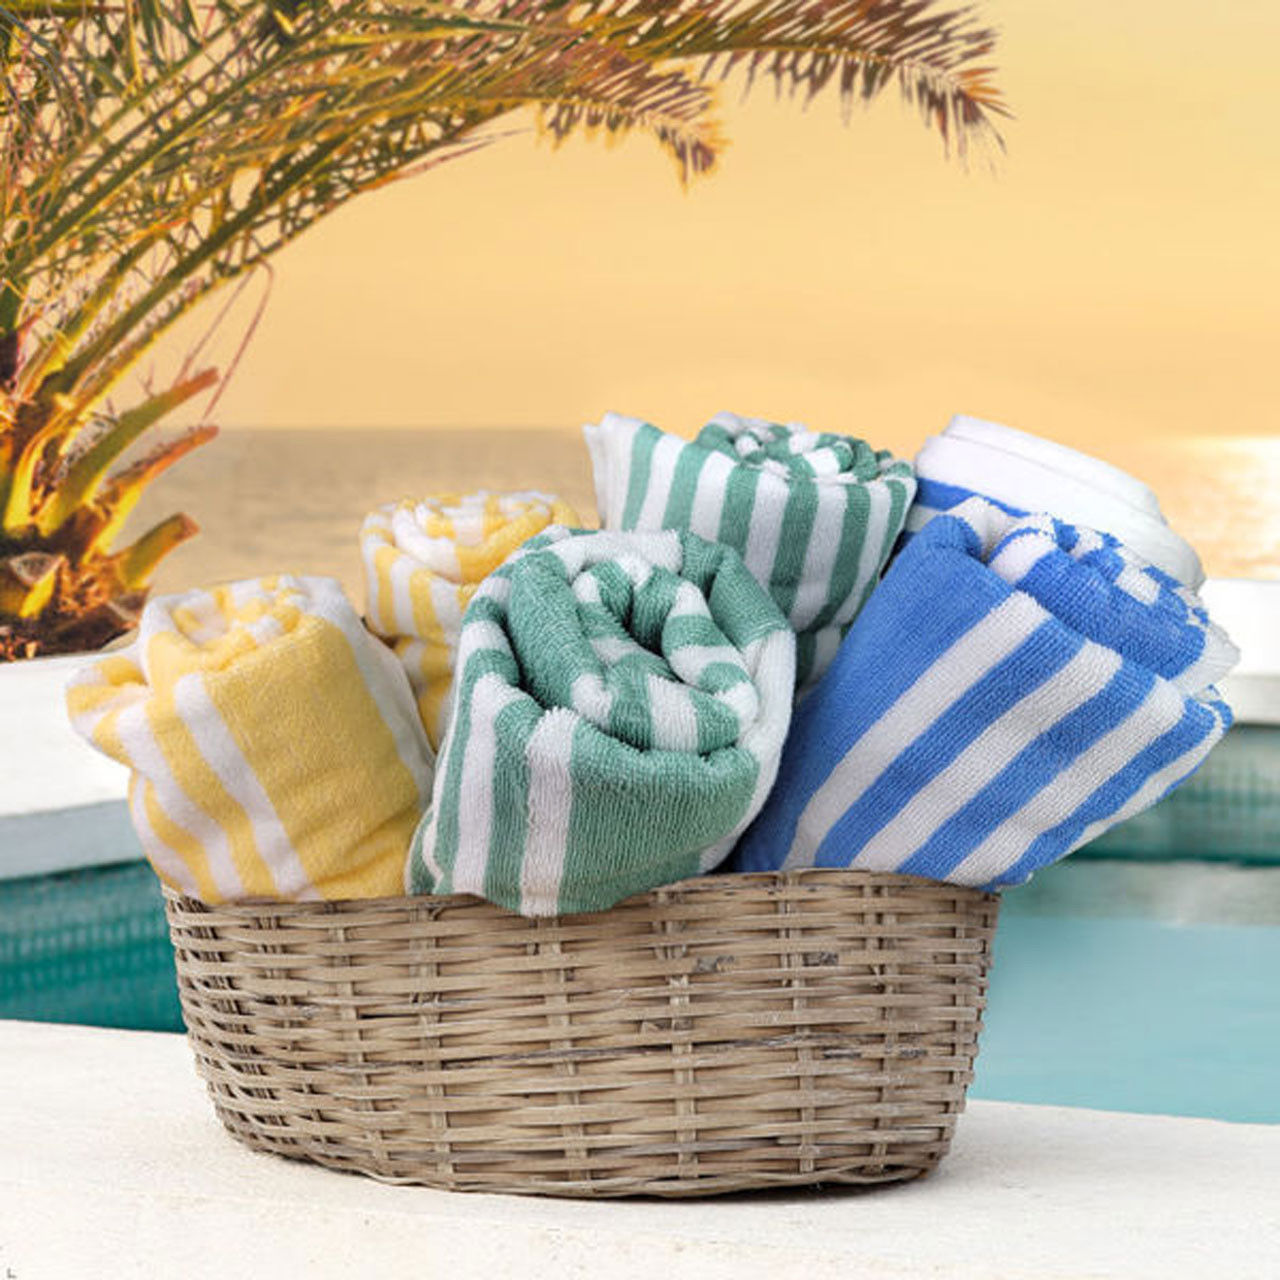 What is the design on the Playa Cabana Stripe Bulk Beach Towels?